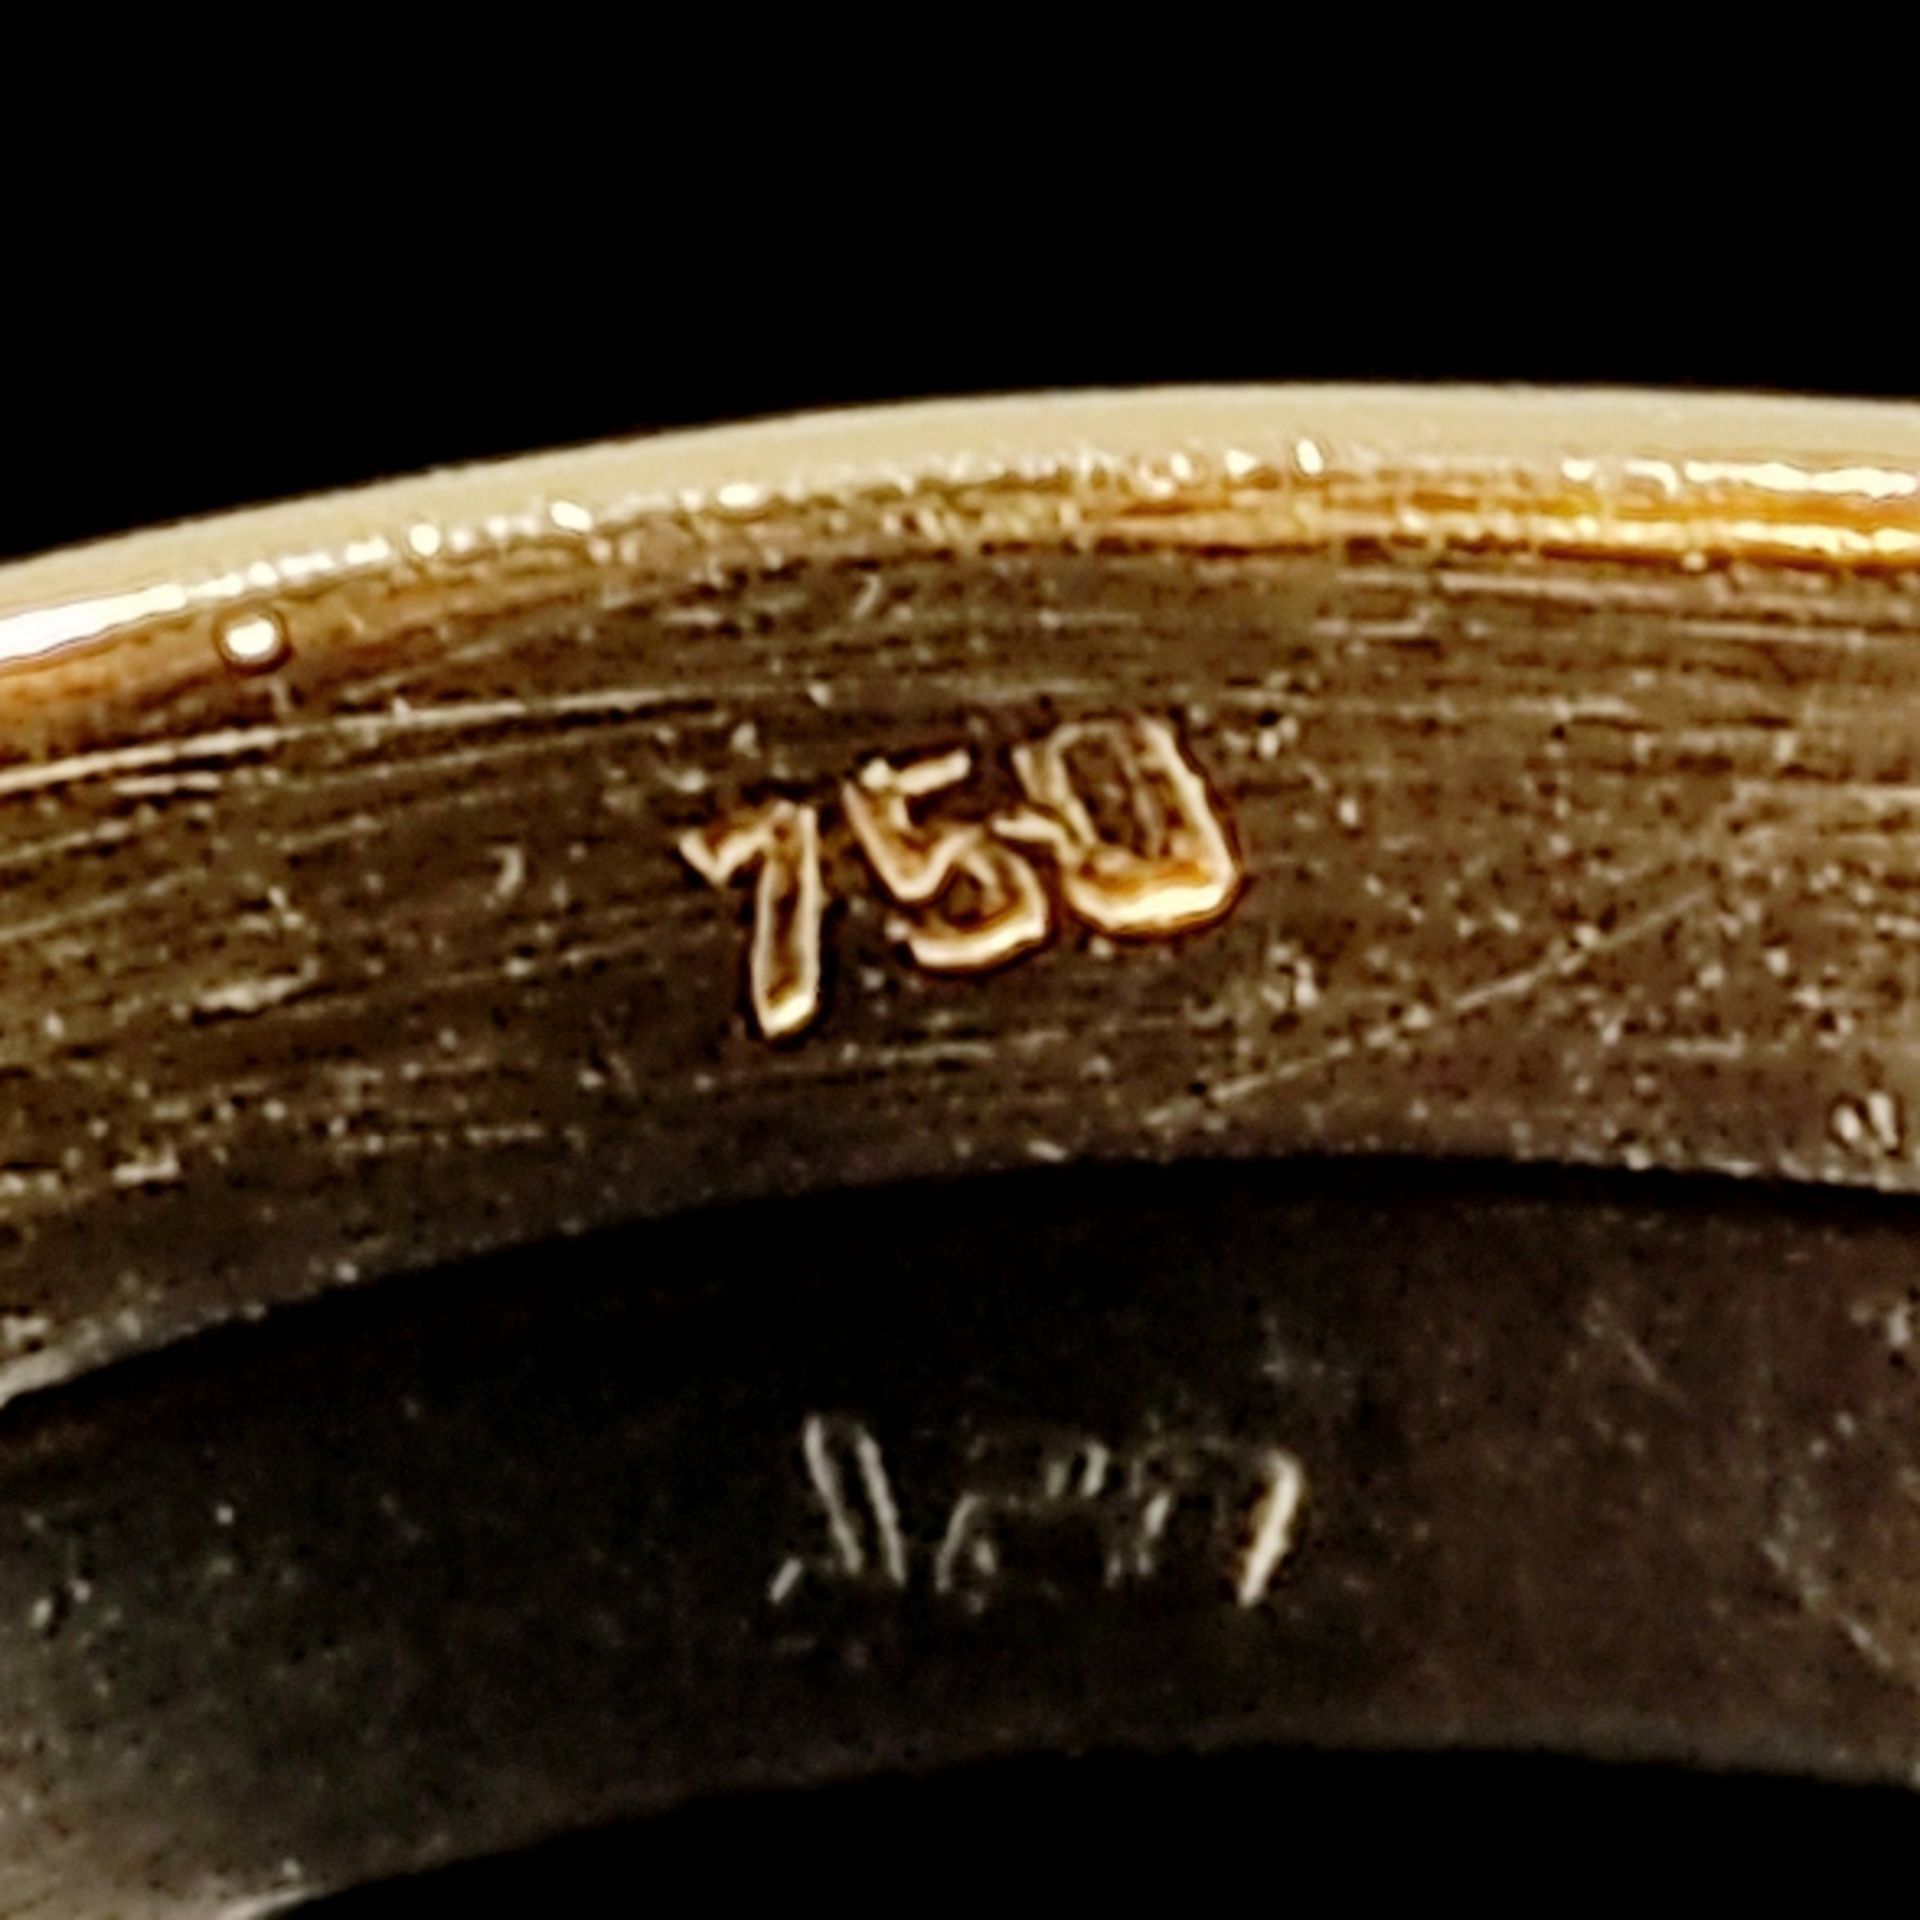 Aquamarin-Diamant-Ring, 750/18K Gelbgold (punziert), 4,98g, mittig oval facettierter Aquamarin, lin - Bild 3 aus 3